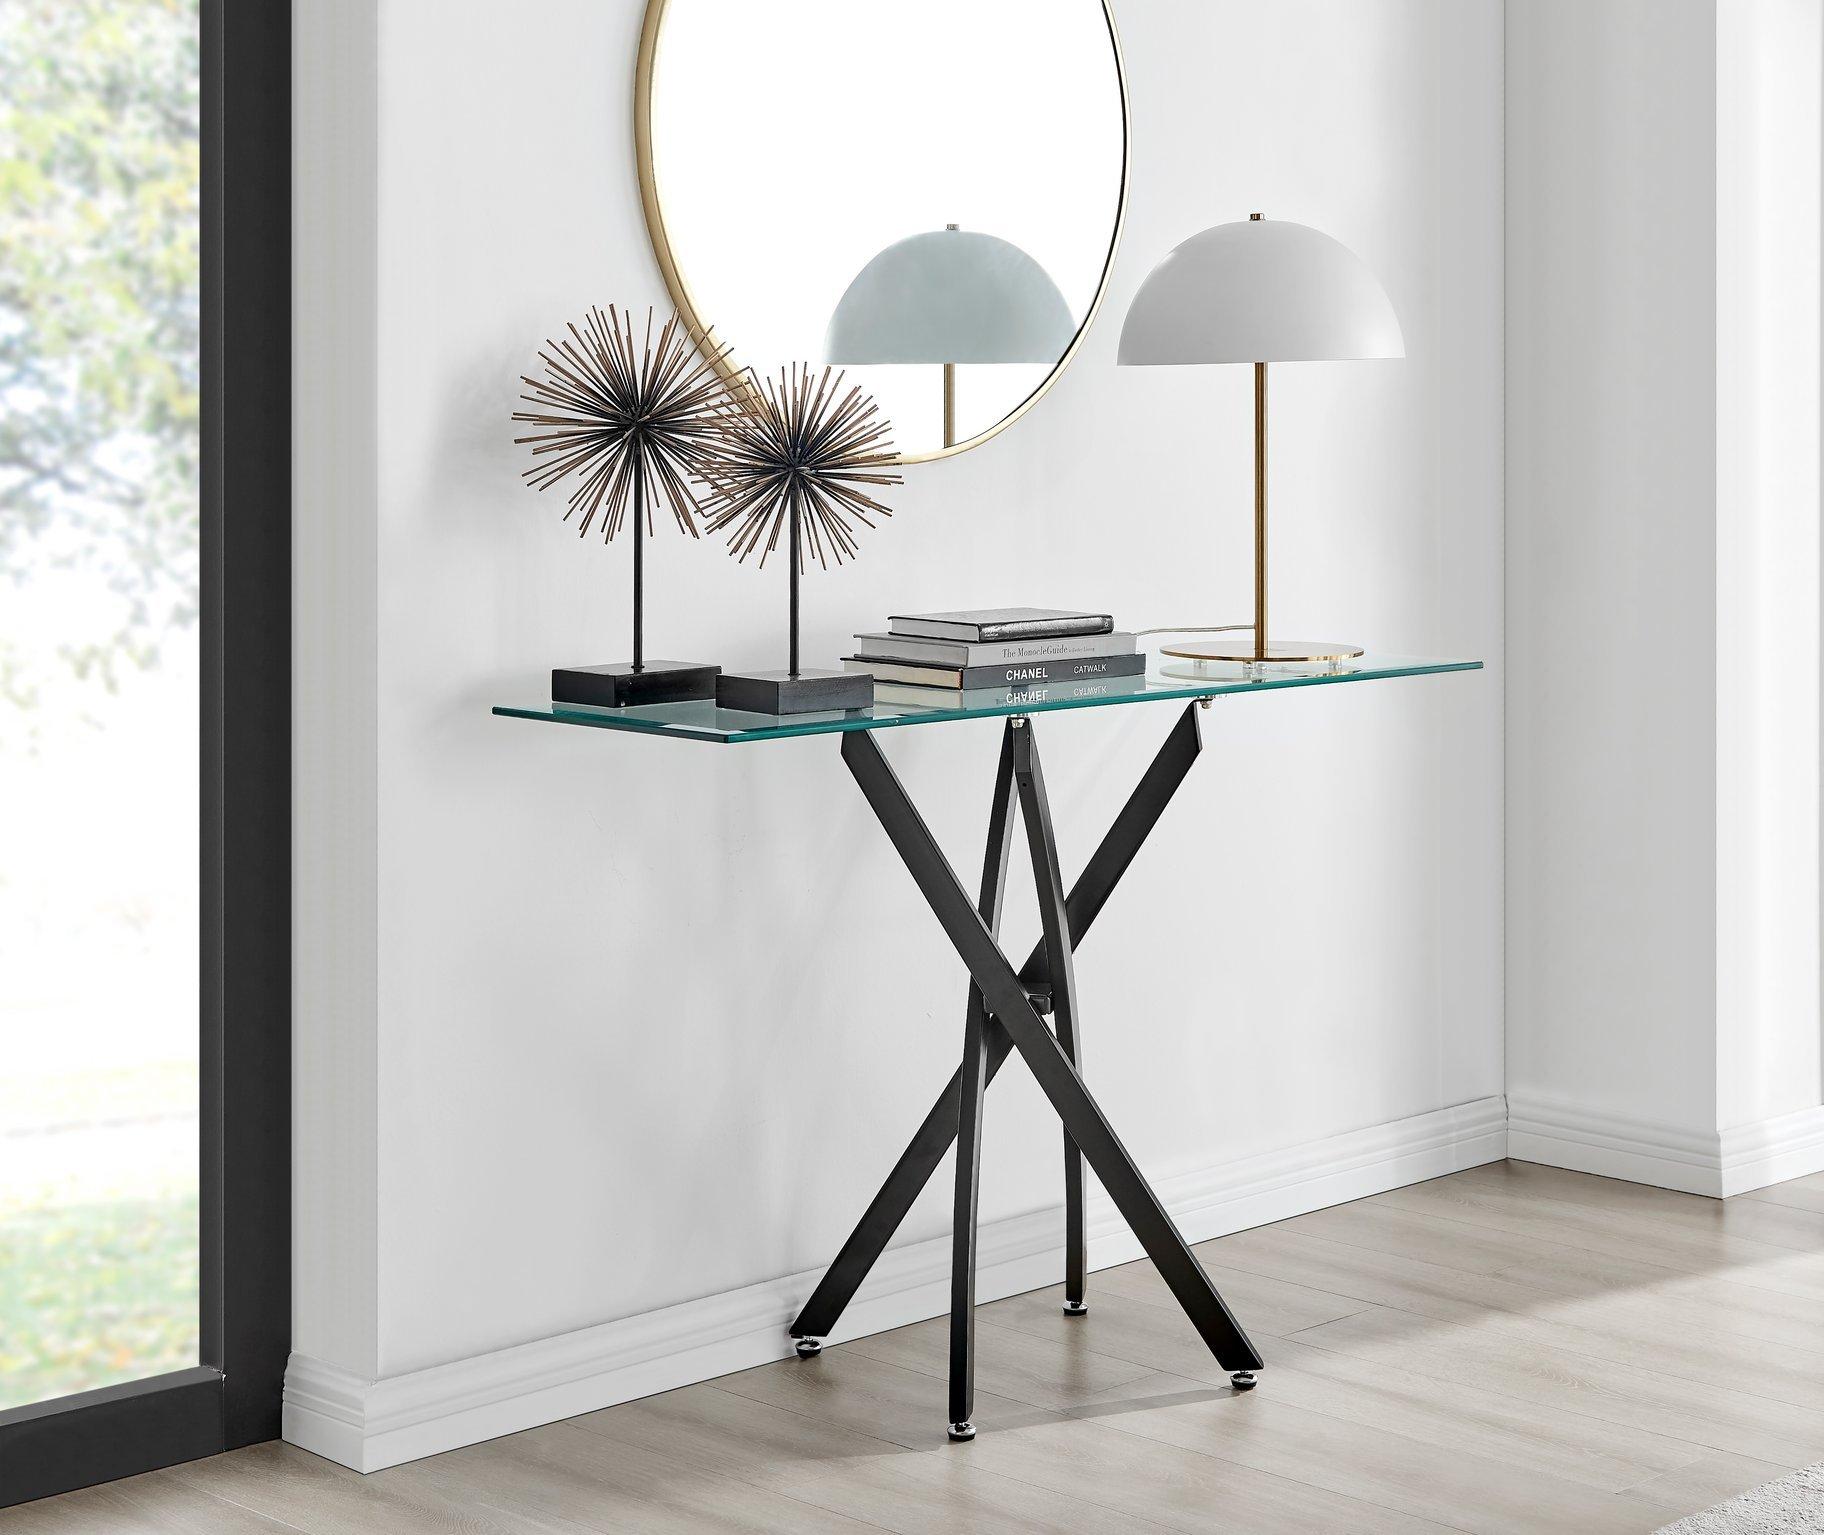 Leonardo Rectangular Glass Console Table with Metal Angled Starburst Legs for Modern Living Room